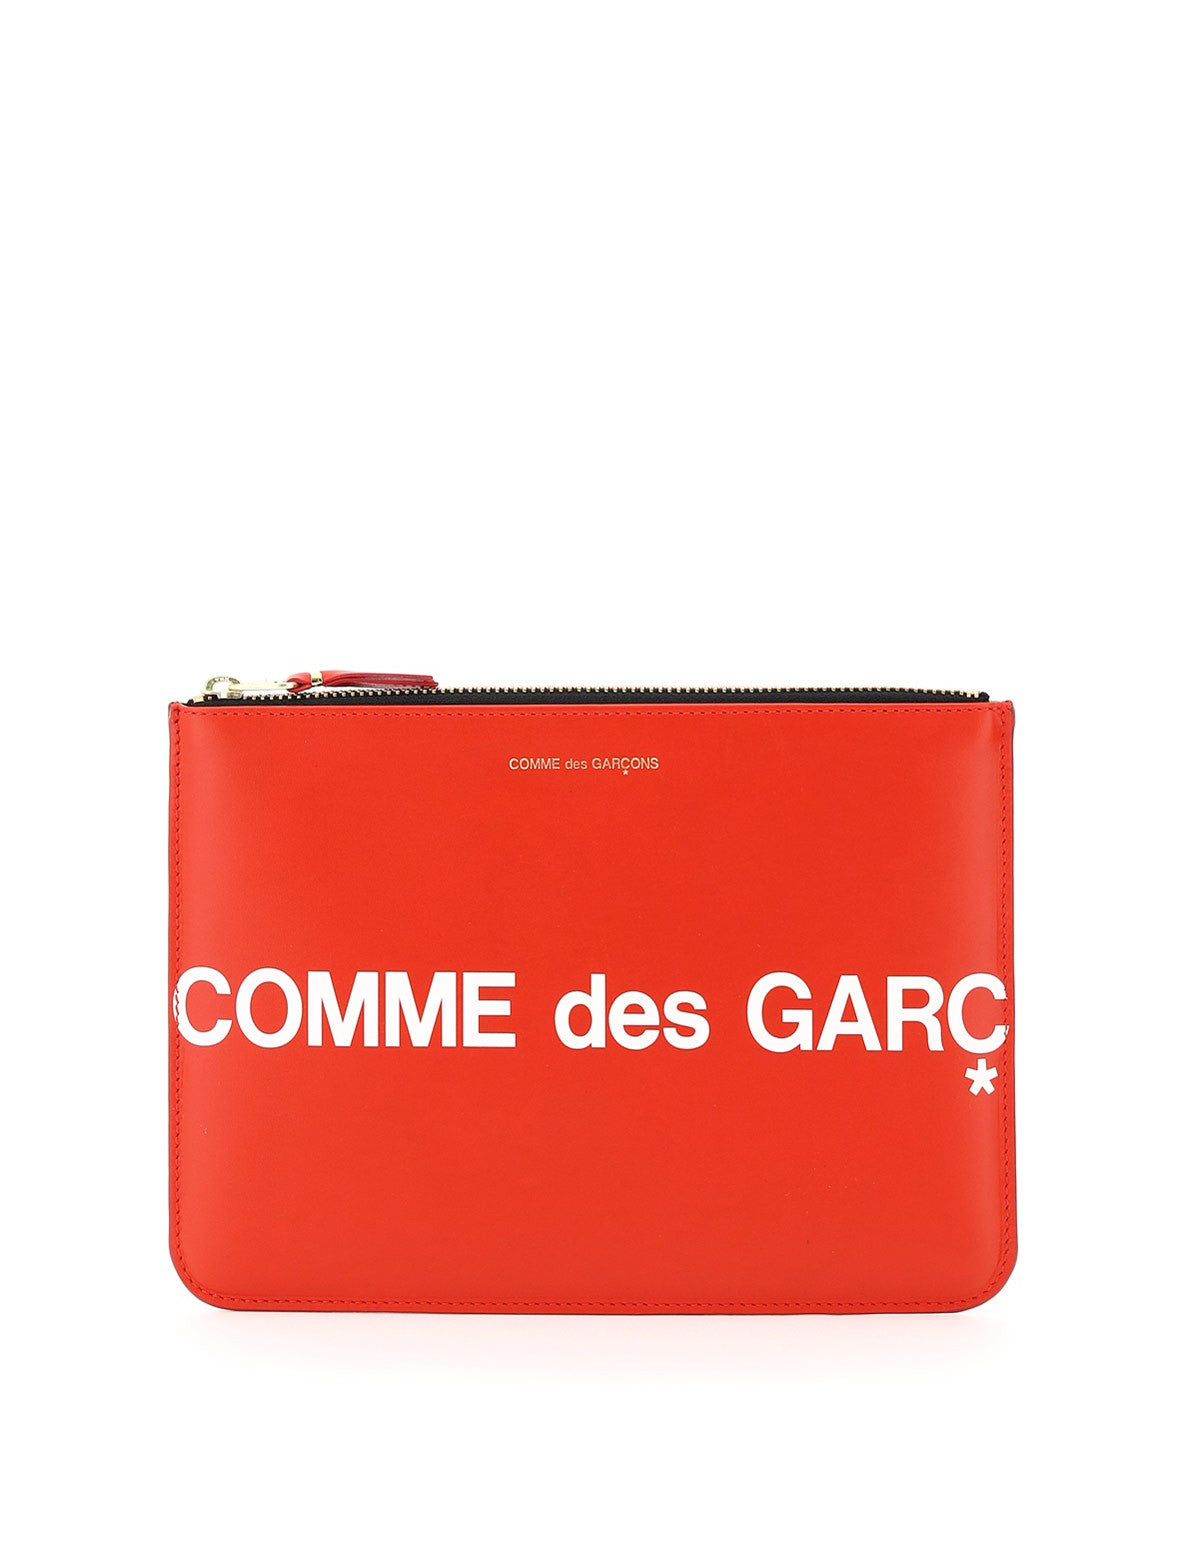 comme-des-garcons-wallet-leather-pouch-with-logo_ad1526cd-3048-42e4-9d09-799e32b17c74.jpg